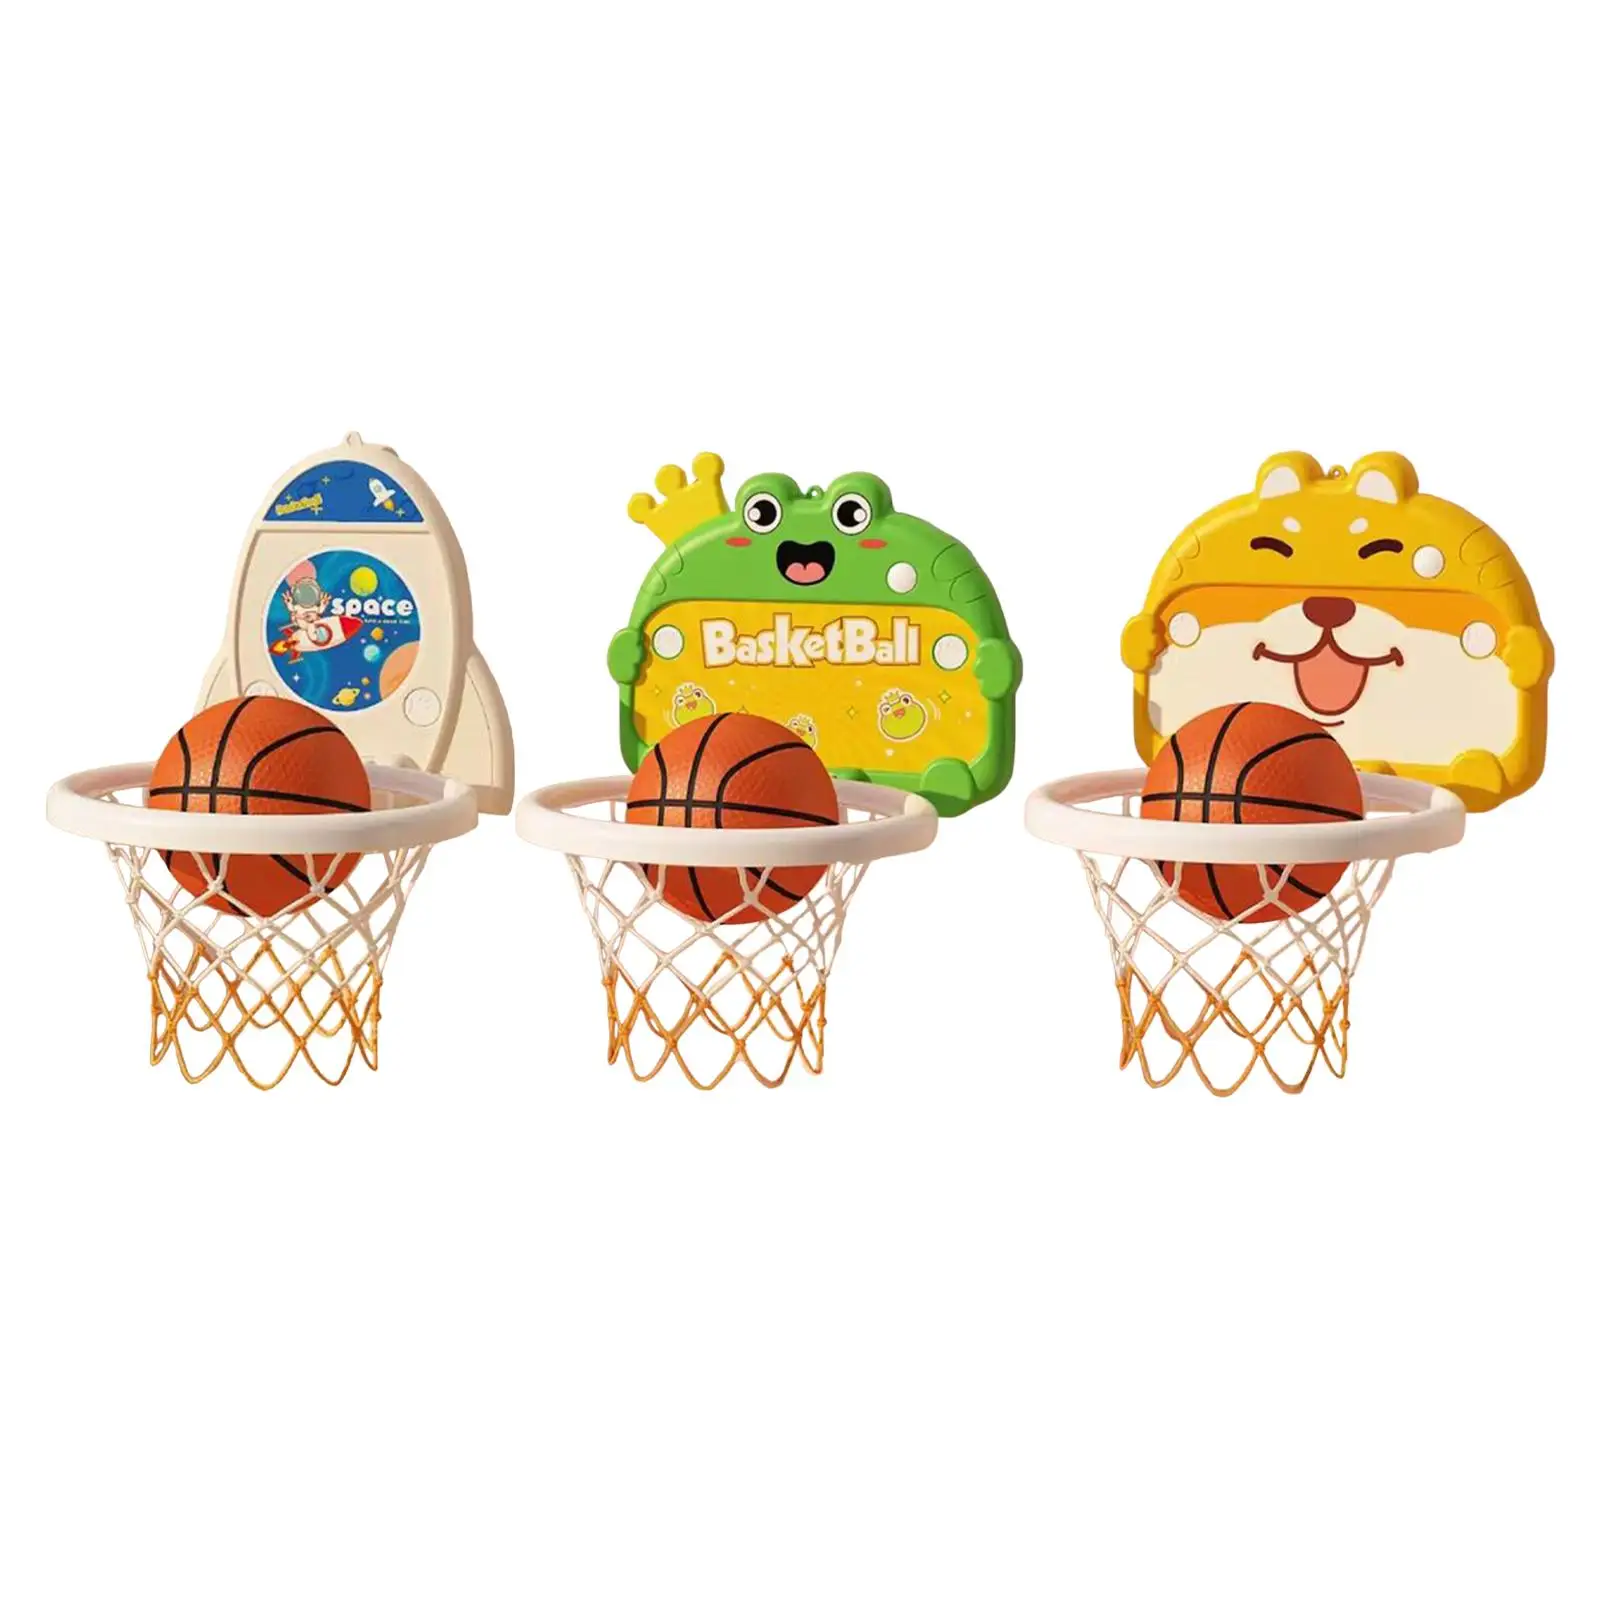 Mini Basketball Hoop Set Activity Centers Wall Mounted Basketball Board Basketball Toys for Indoor Door Holiday Gifts Bedroom